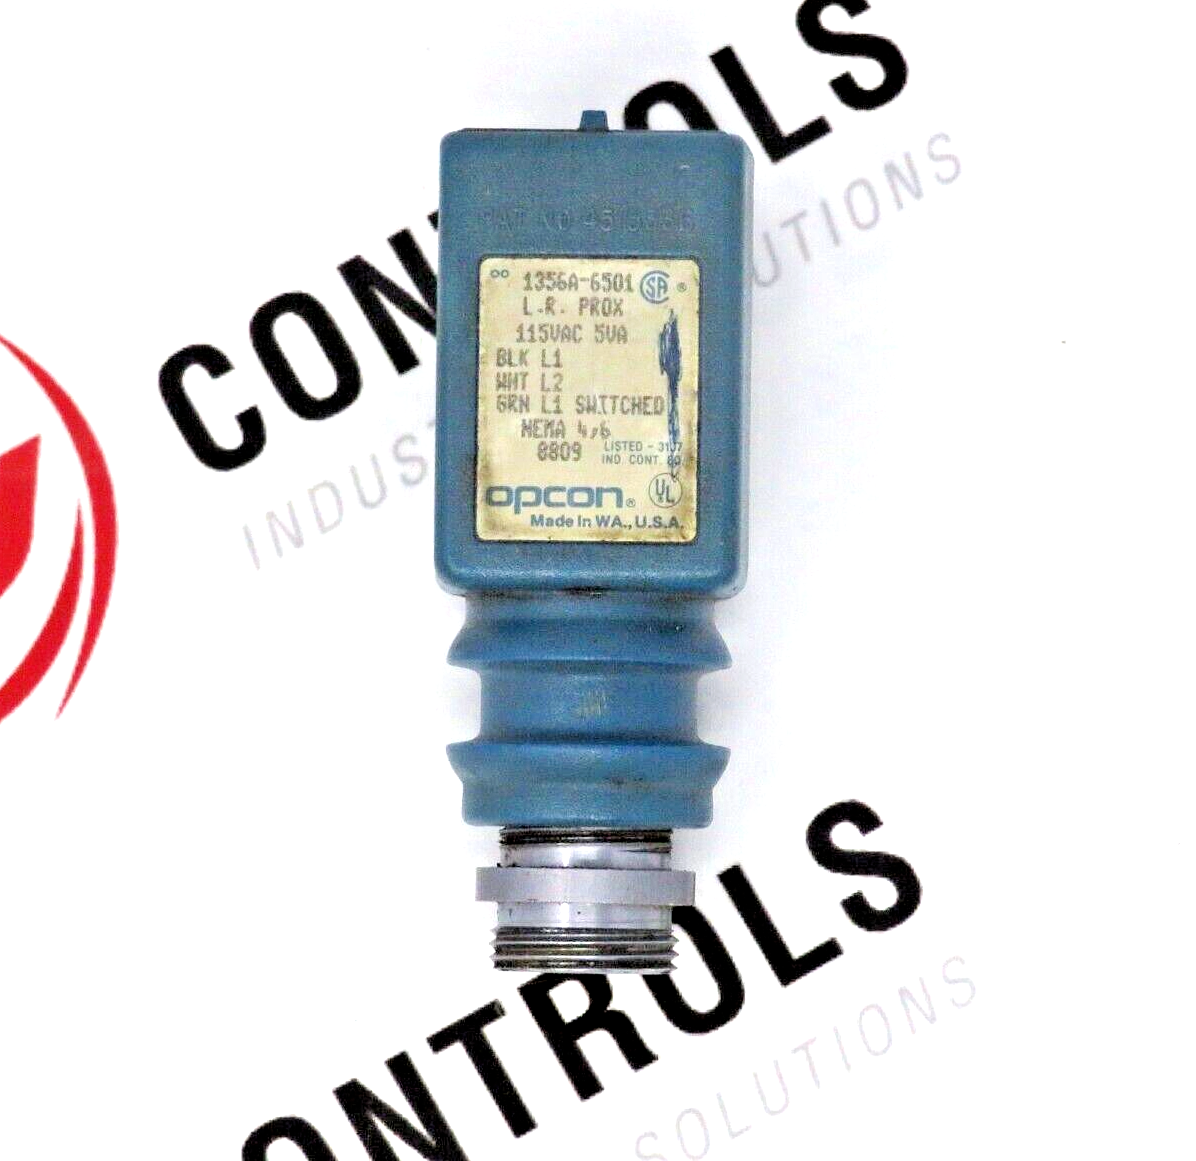 Eaton Opcon 1356A-6501 Photoelectric Sensor